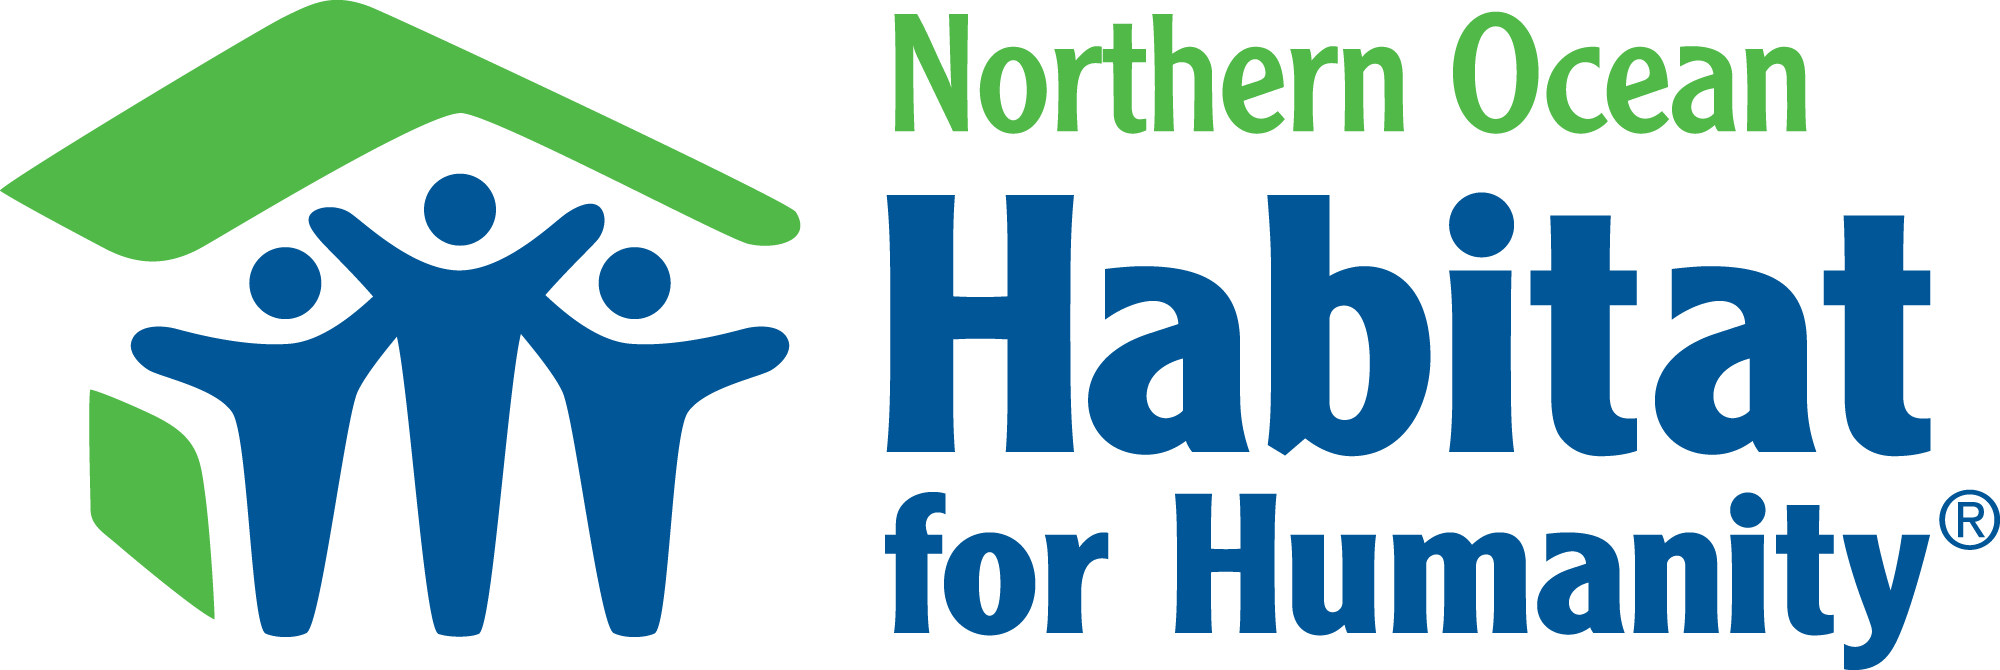 Northern Ocean Habitat for Humanity Logo